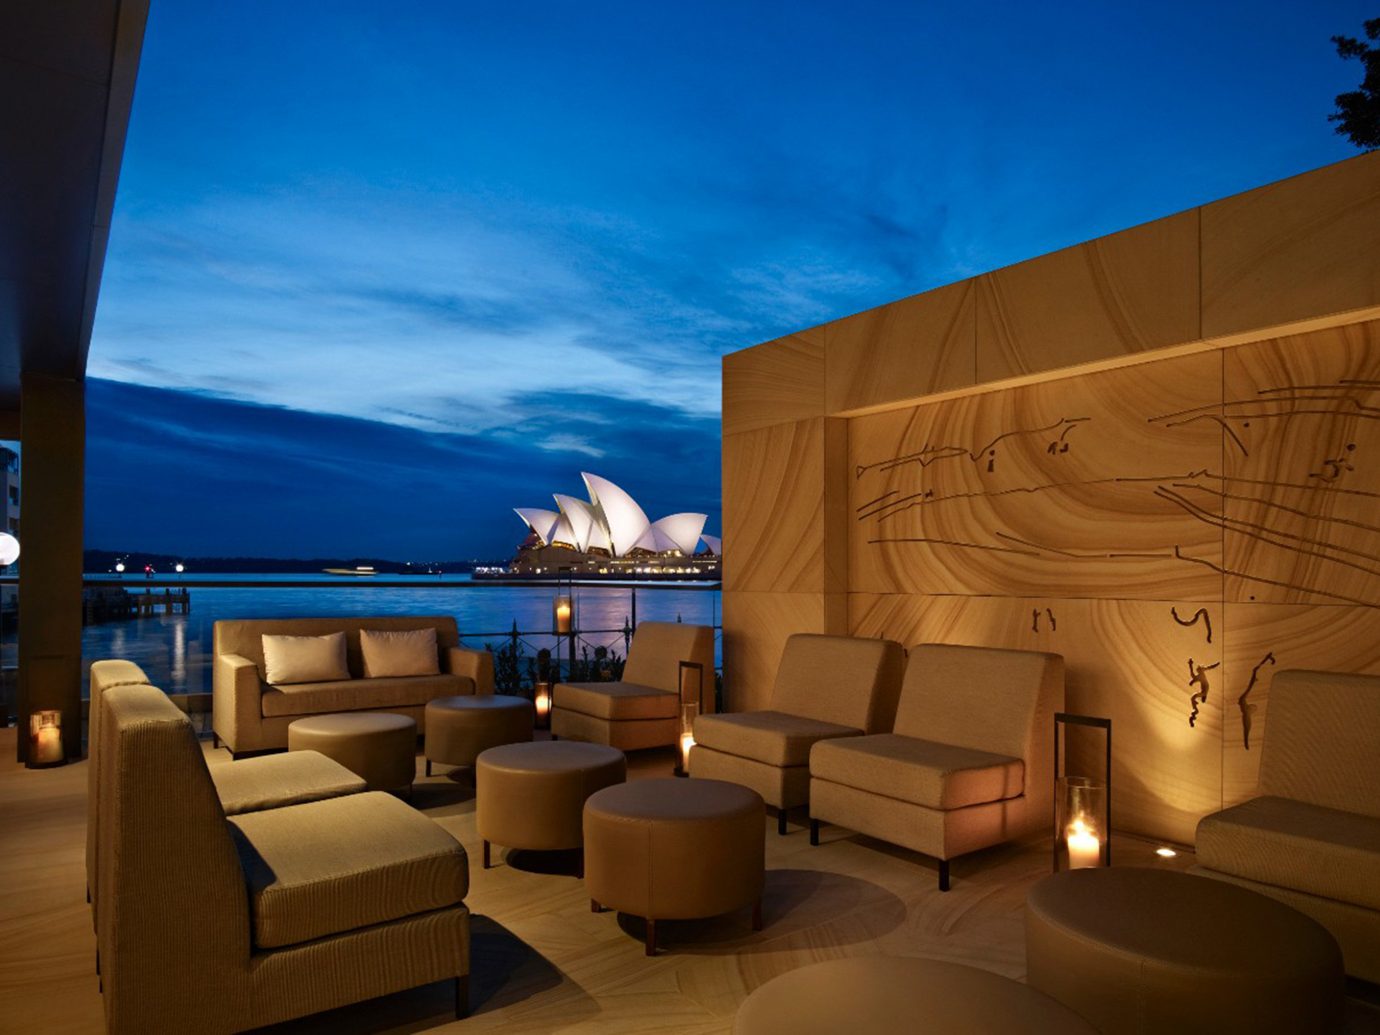 Balcony Hotels Living Lounge Scenic views Trip Ideas sky room house Architecture estate interior design Design